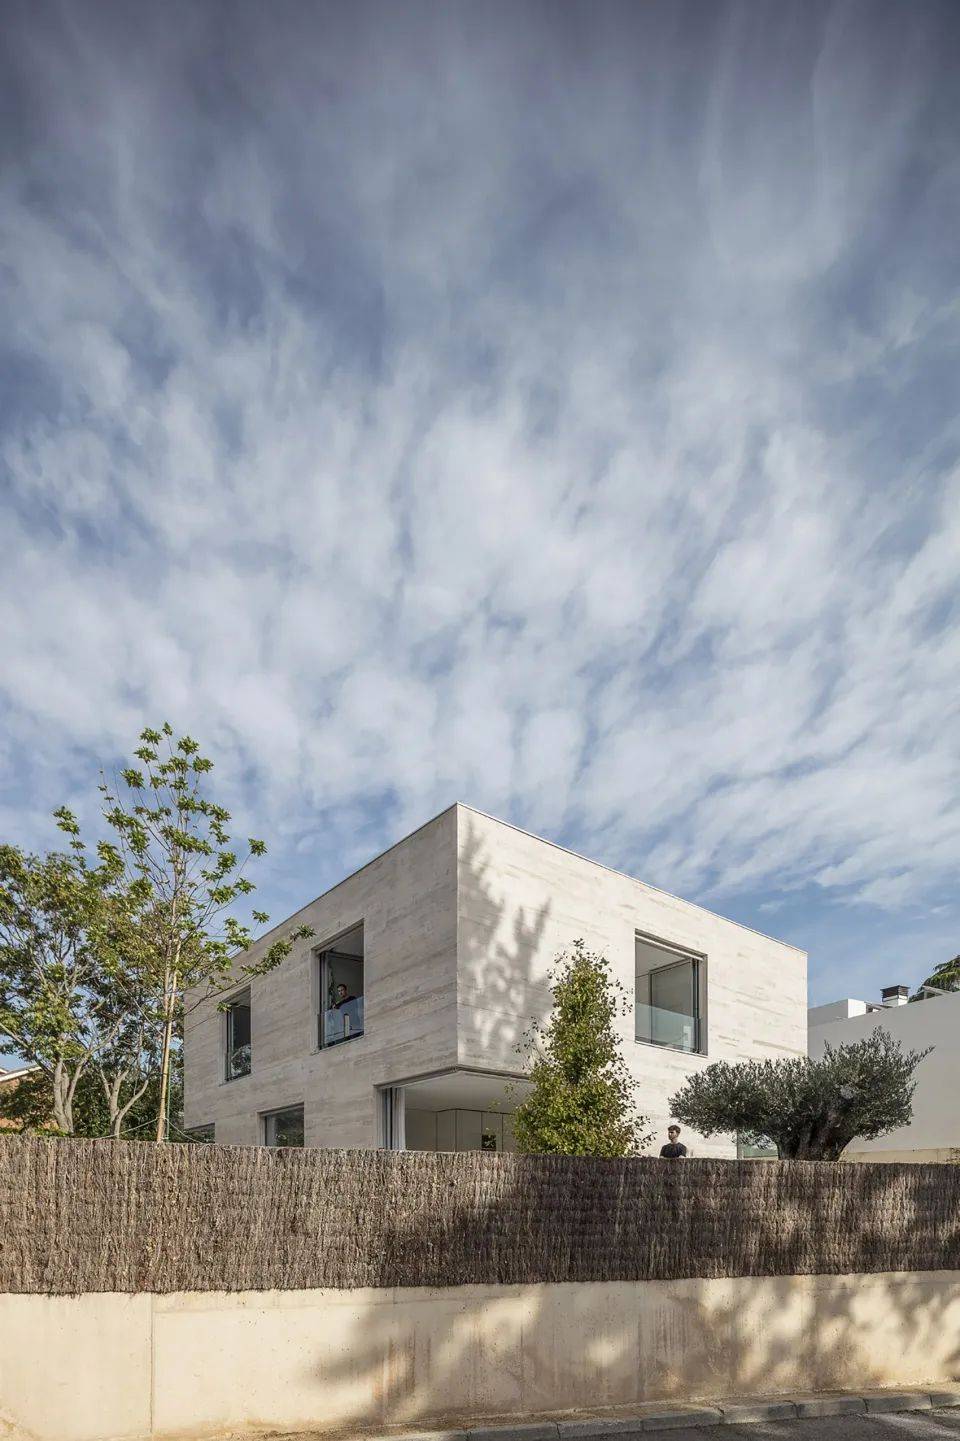 damer住宅是一座精妙的混凝土建筑,建筑师打开建筑四角塑造了菱形空间